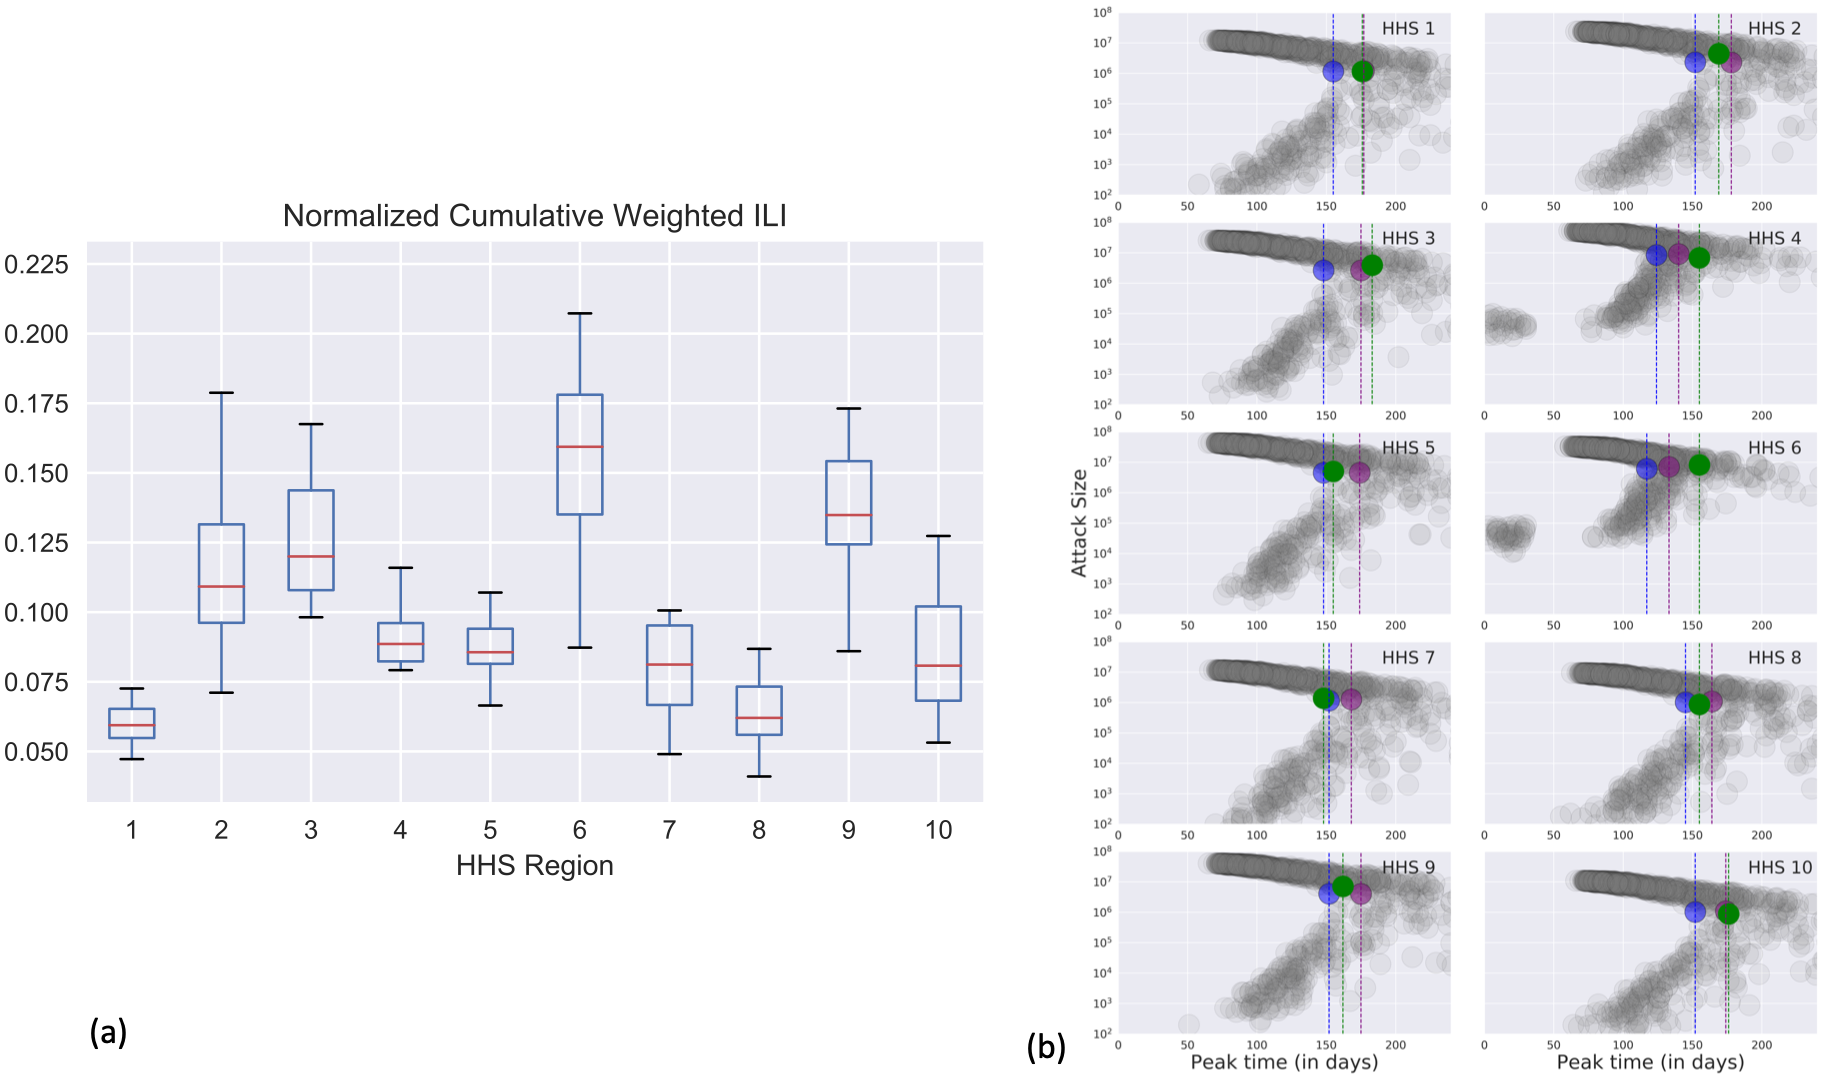 Optimizing spatial allocation of seasonal influenza vaccine under temporal constraints